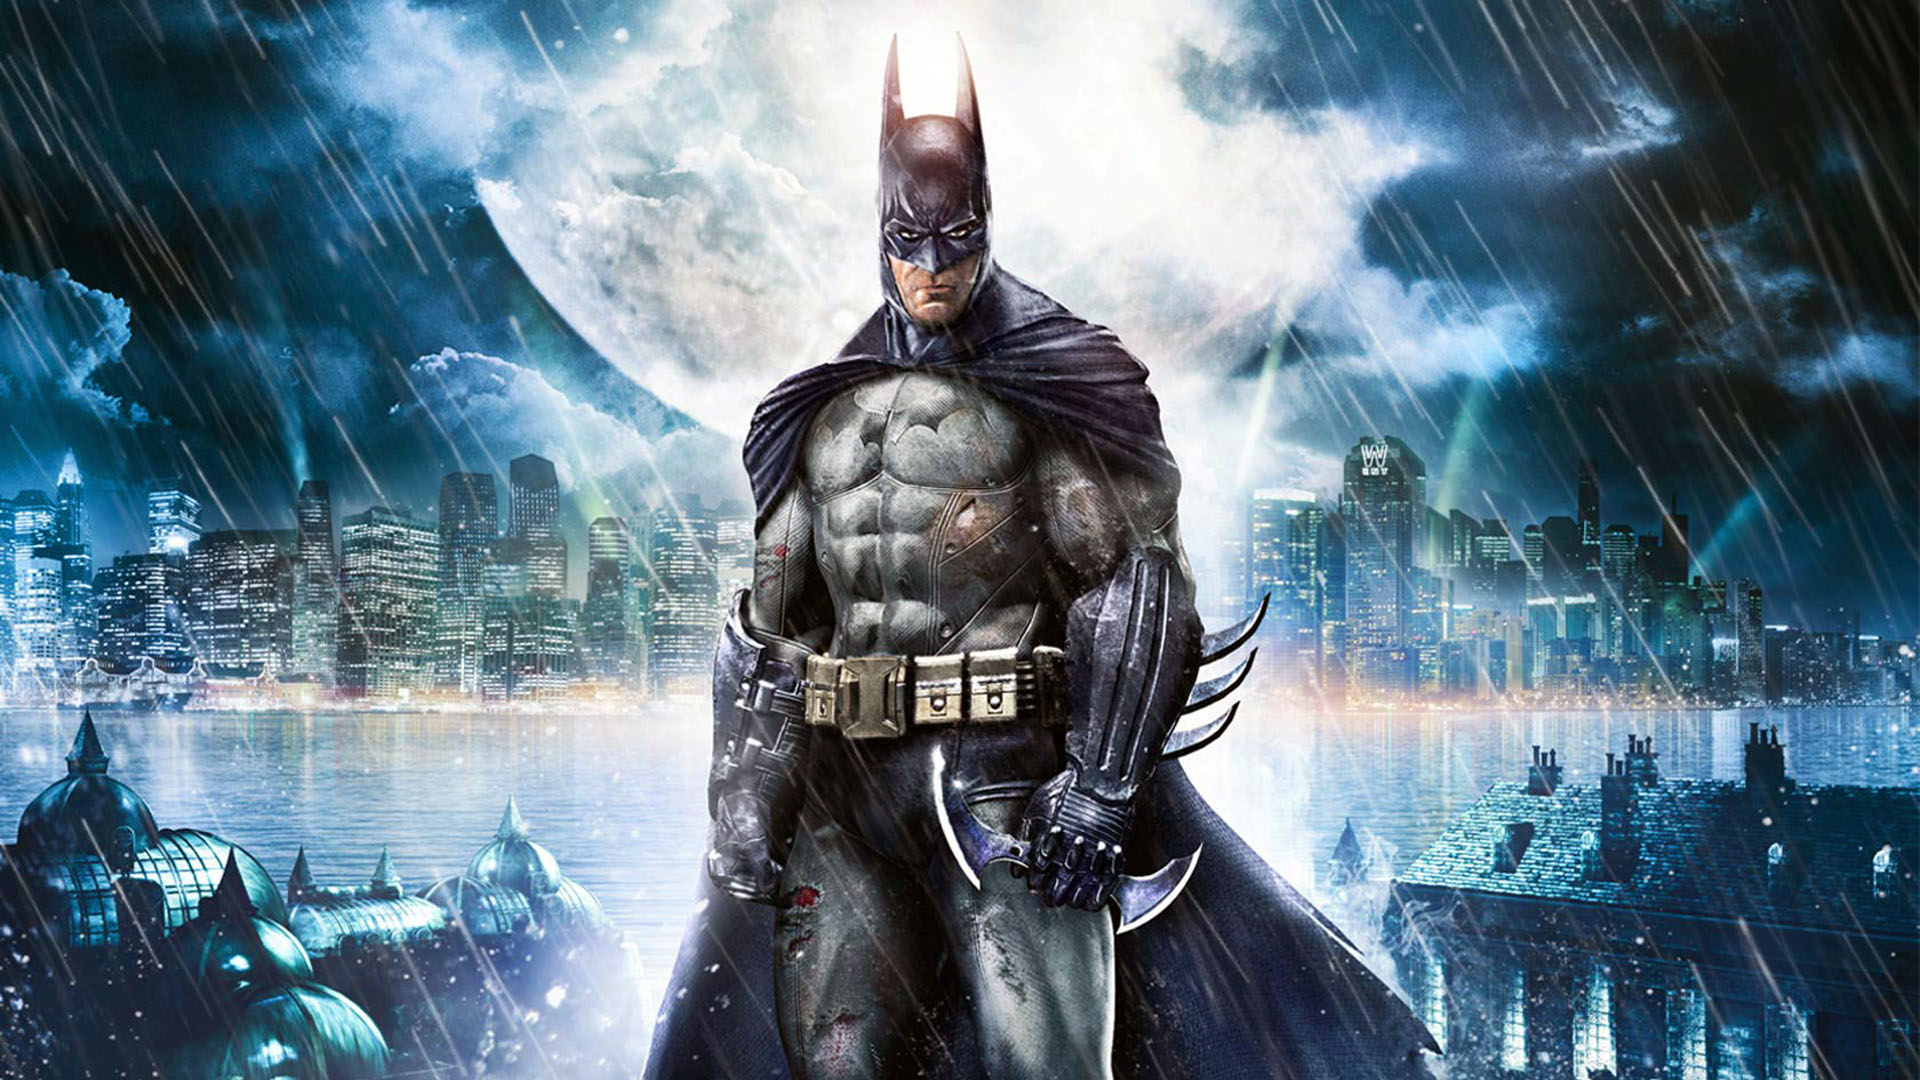 Los mejores fondos de pantalla de Batman: Arkham Asylum para la pantalla del teléfono